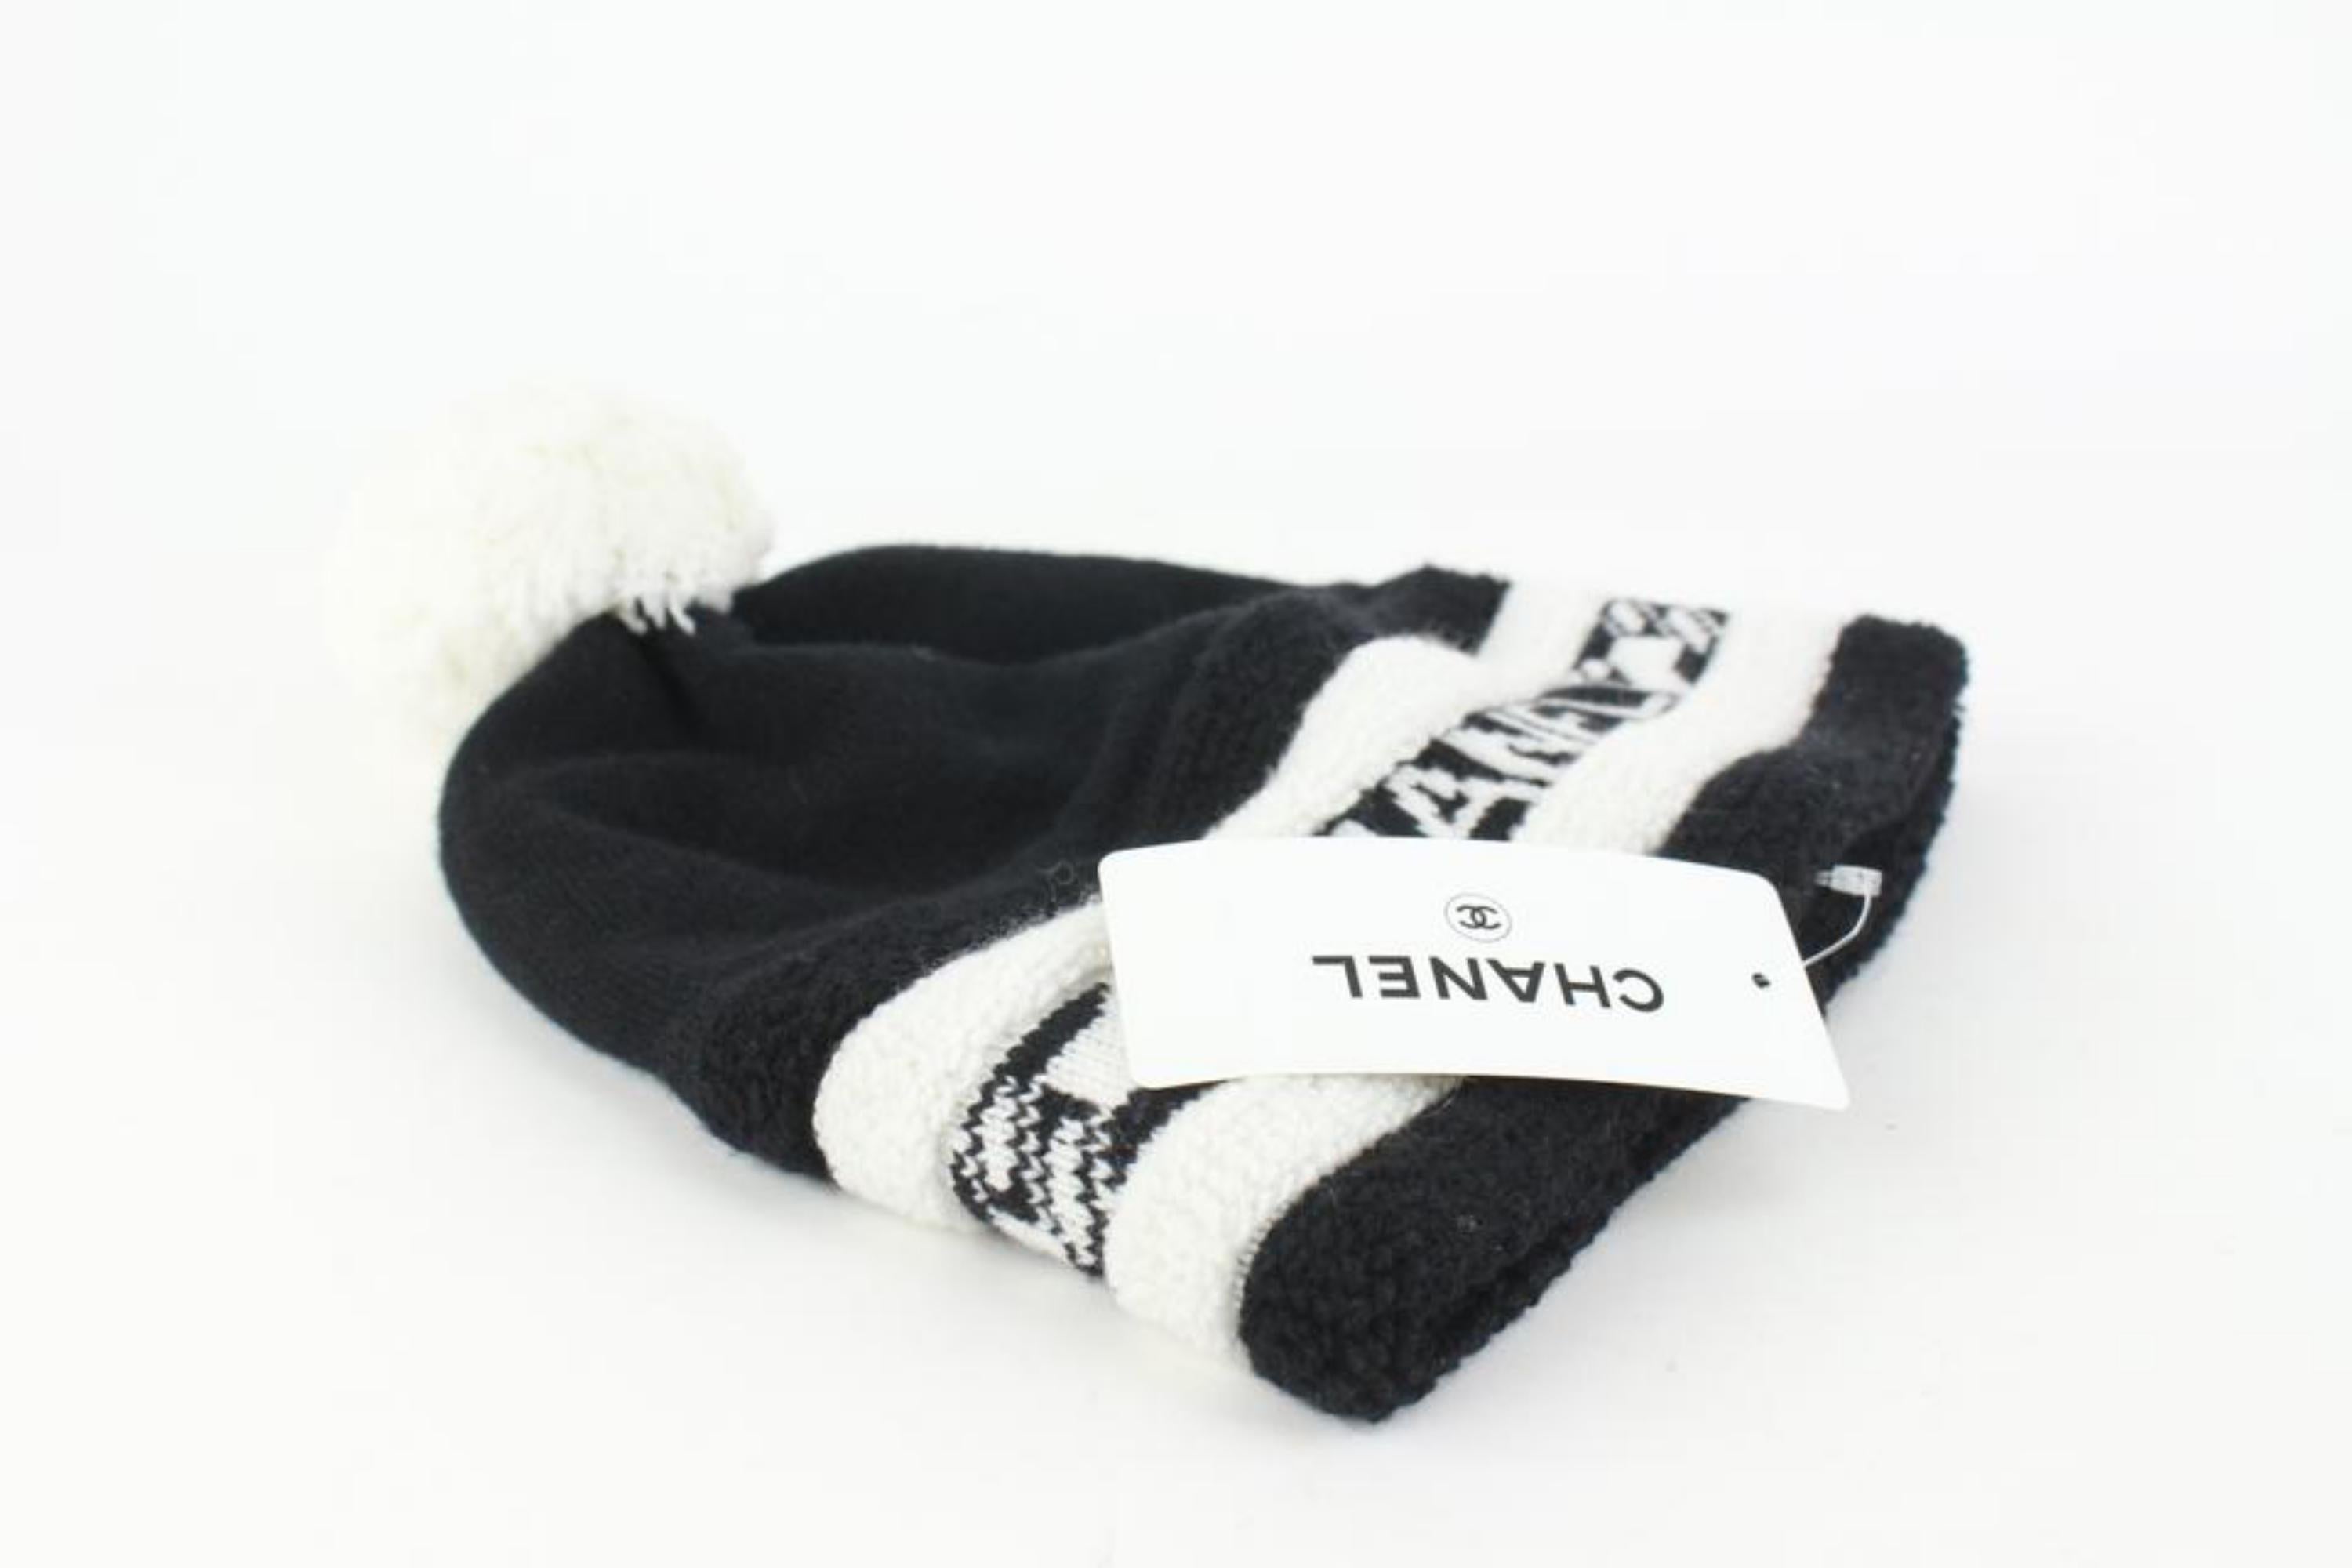 Chanel Black x White Cashmere Pom Pom Beanie Skull Cap Ski Hat 1213c5 5